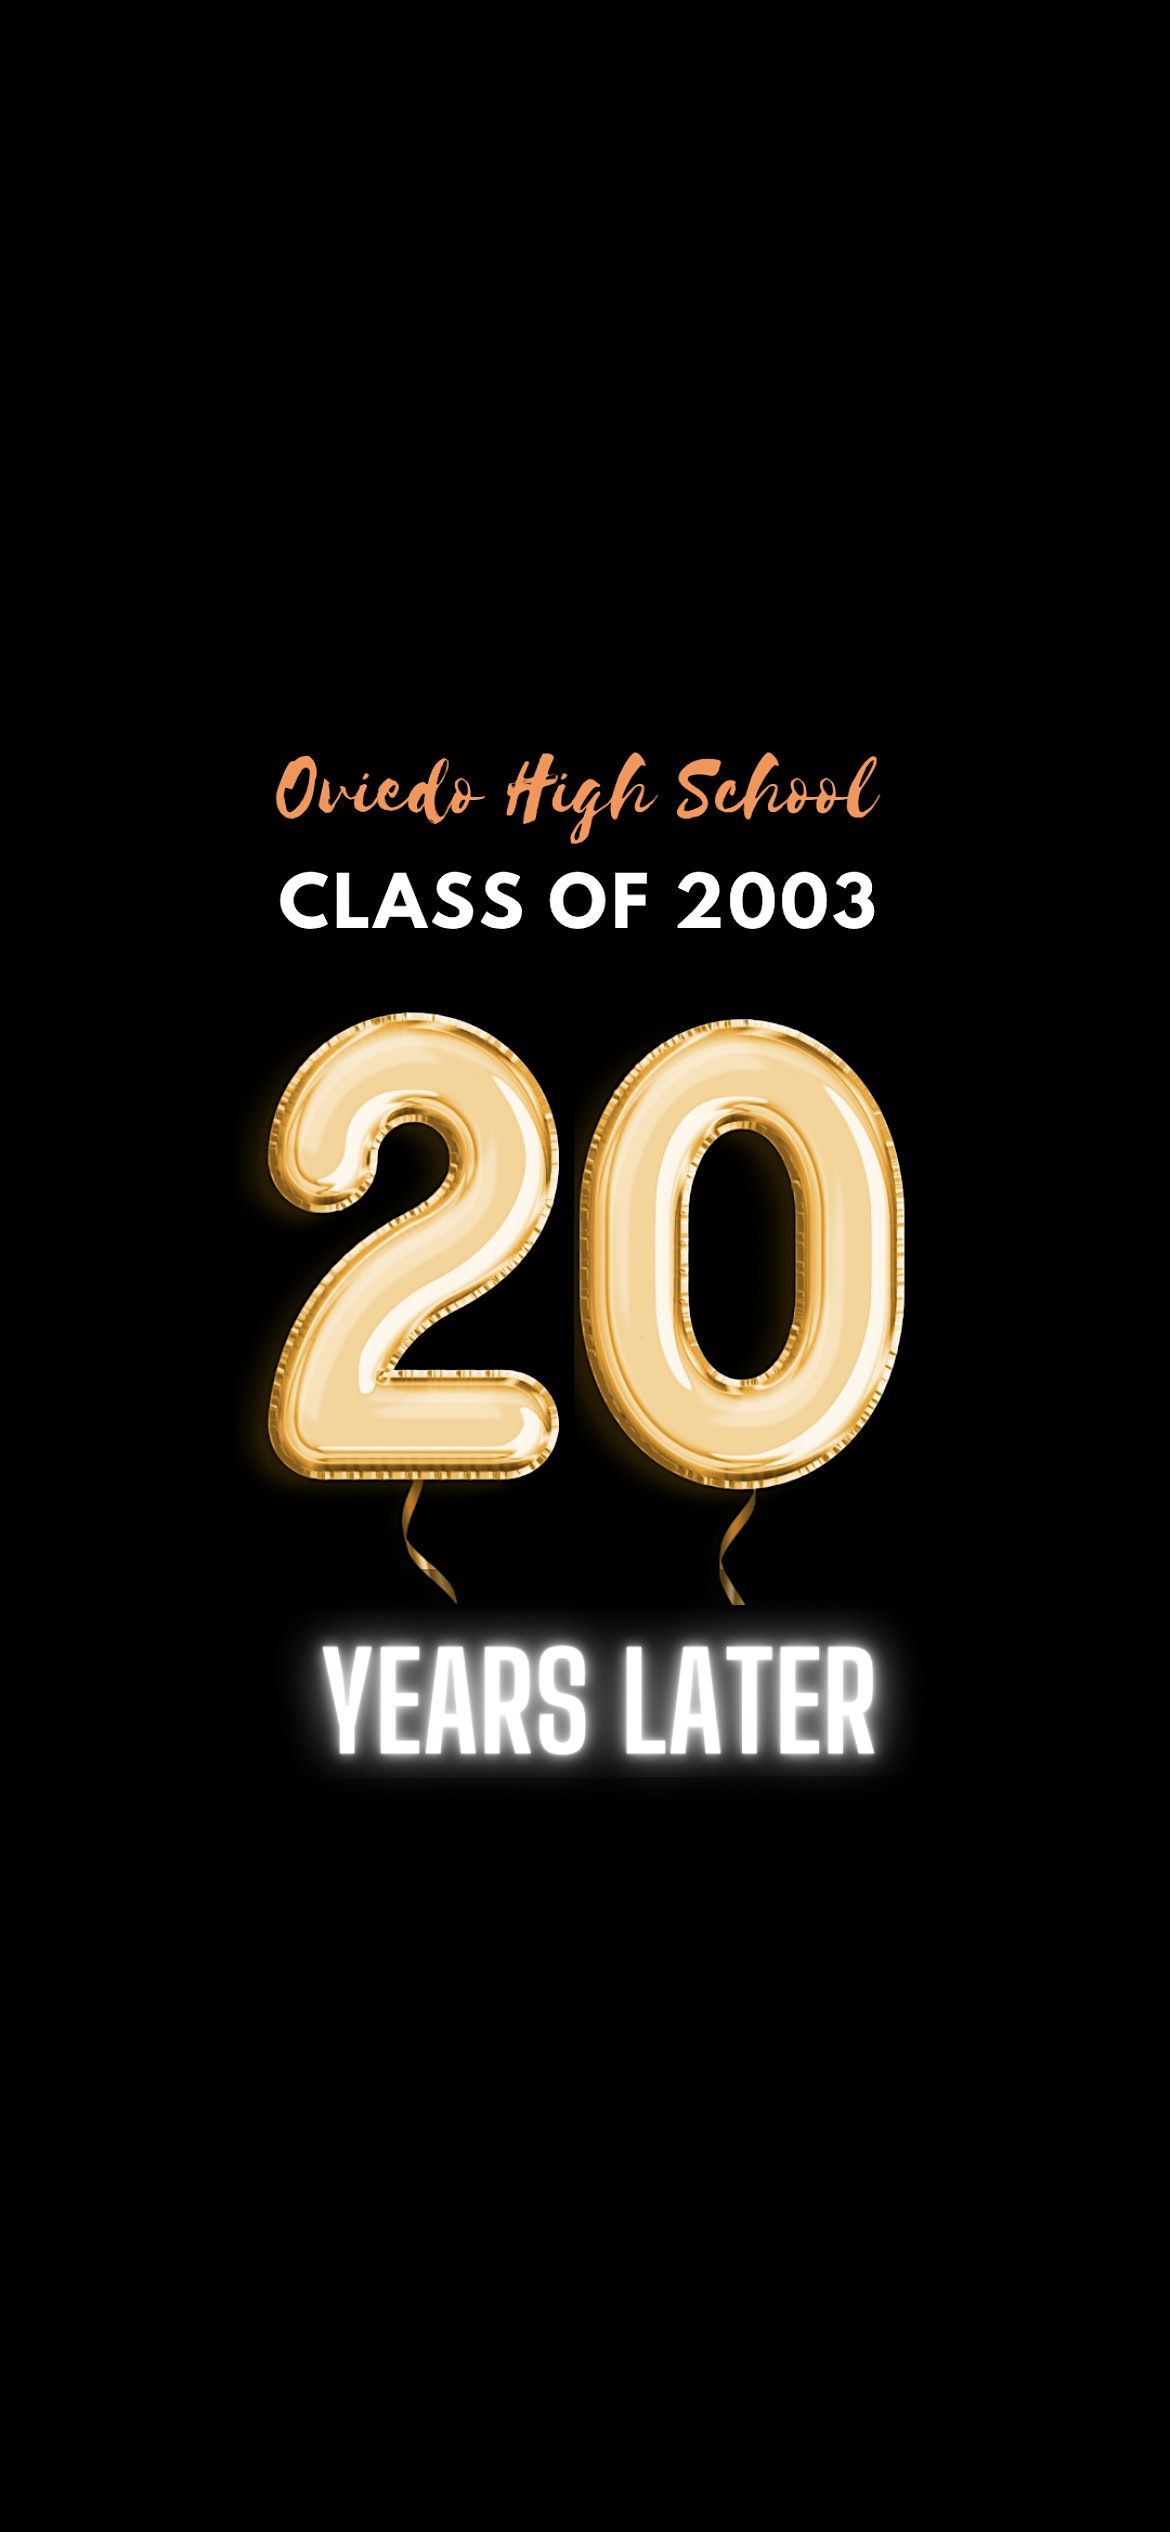 Oviedo High School Class of 2003 Reunion: 20 years later